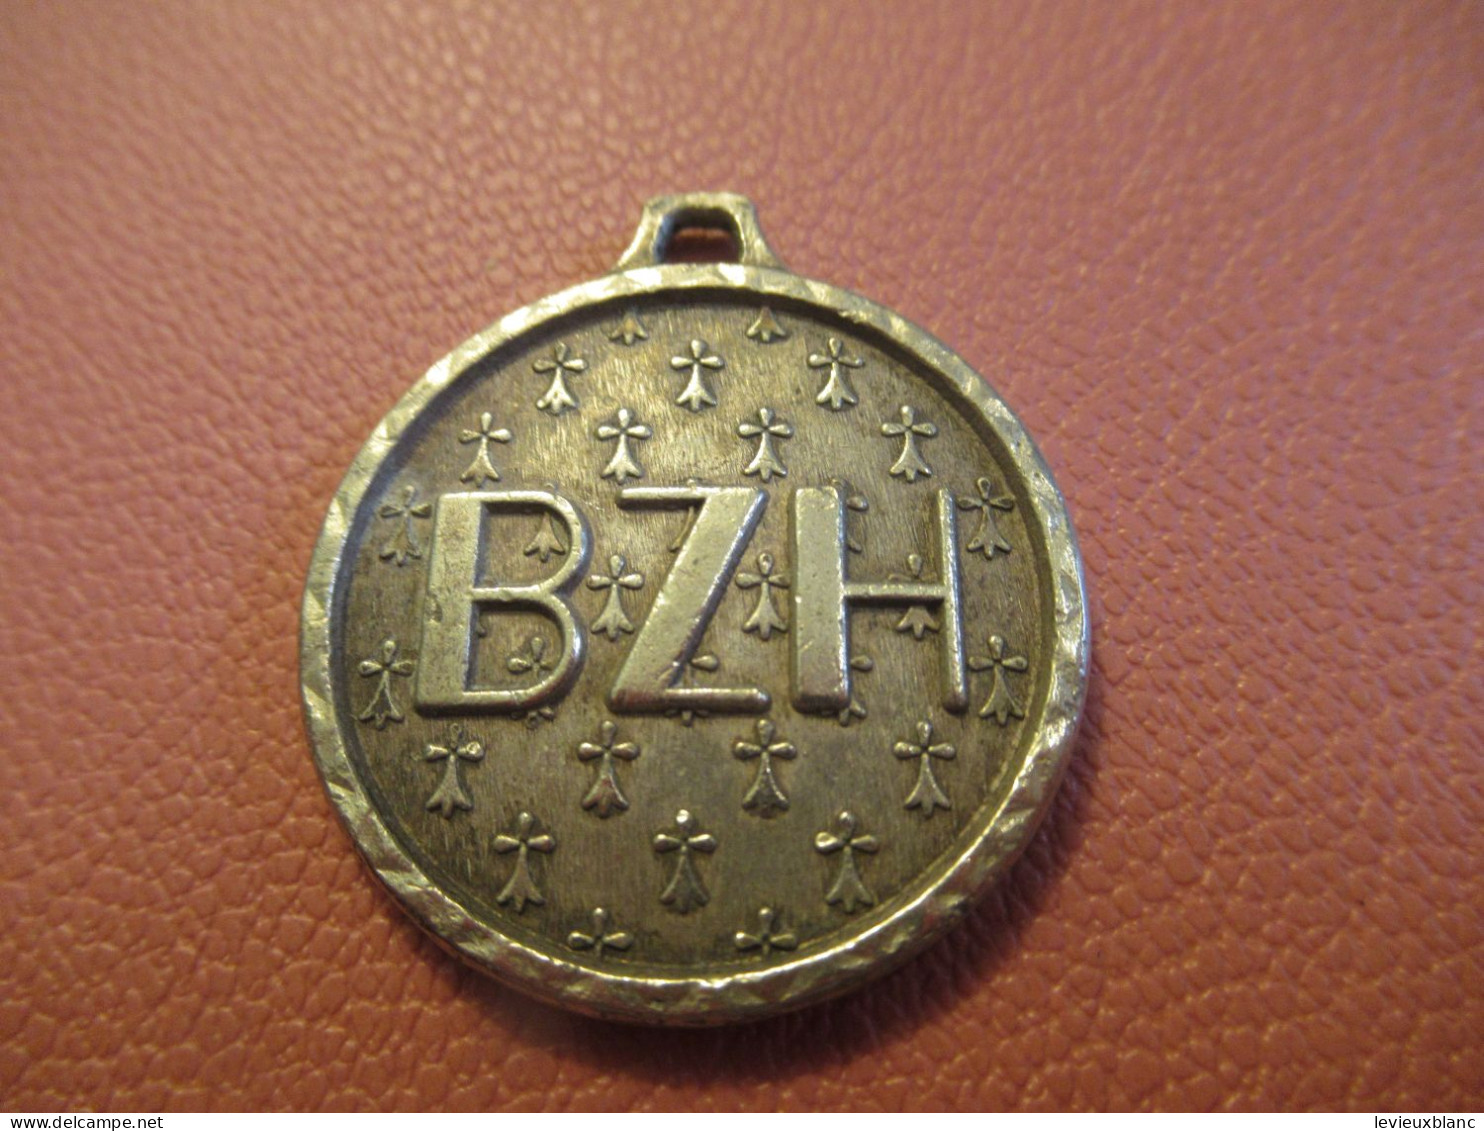 Porte-Clé Ancien/Bretagne/Régionalisme/BZH/ Breizh-Bretagne / Avec Hermines Et Drapeau Breton / Vers 1960    POC762 - Key-rings